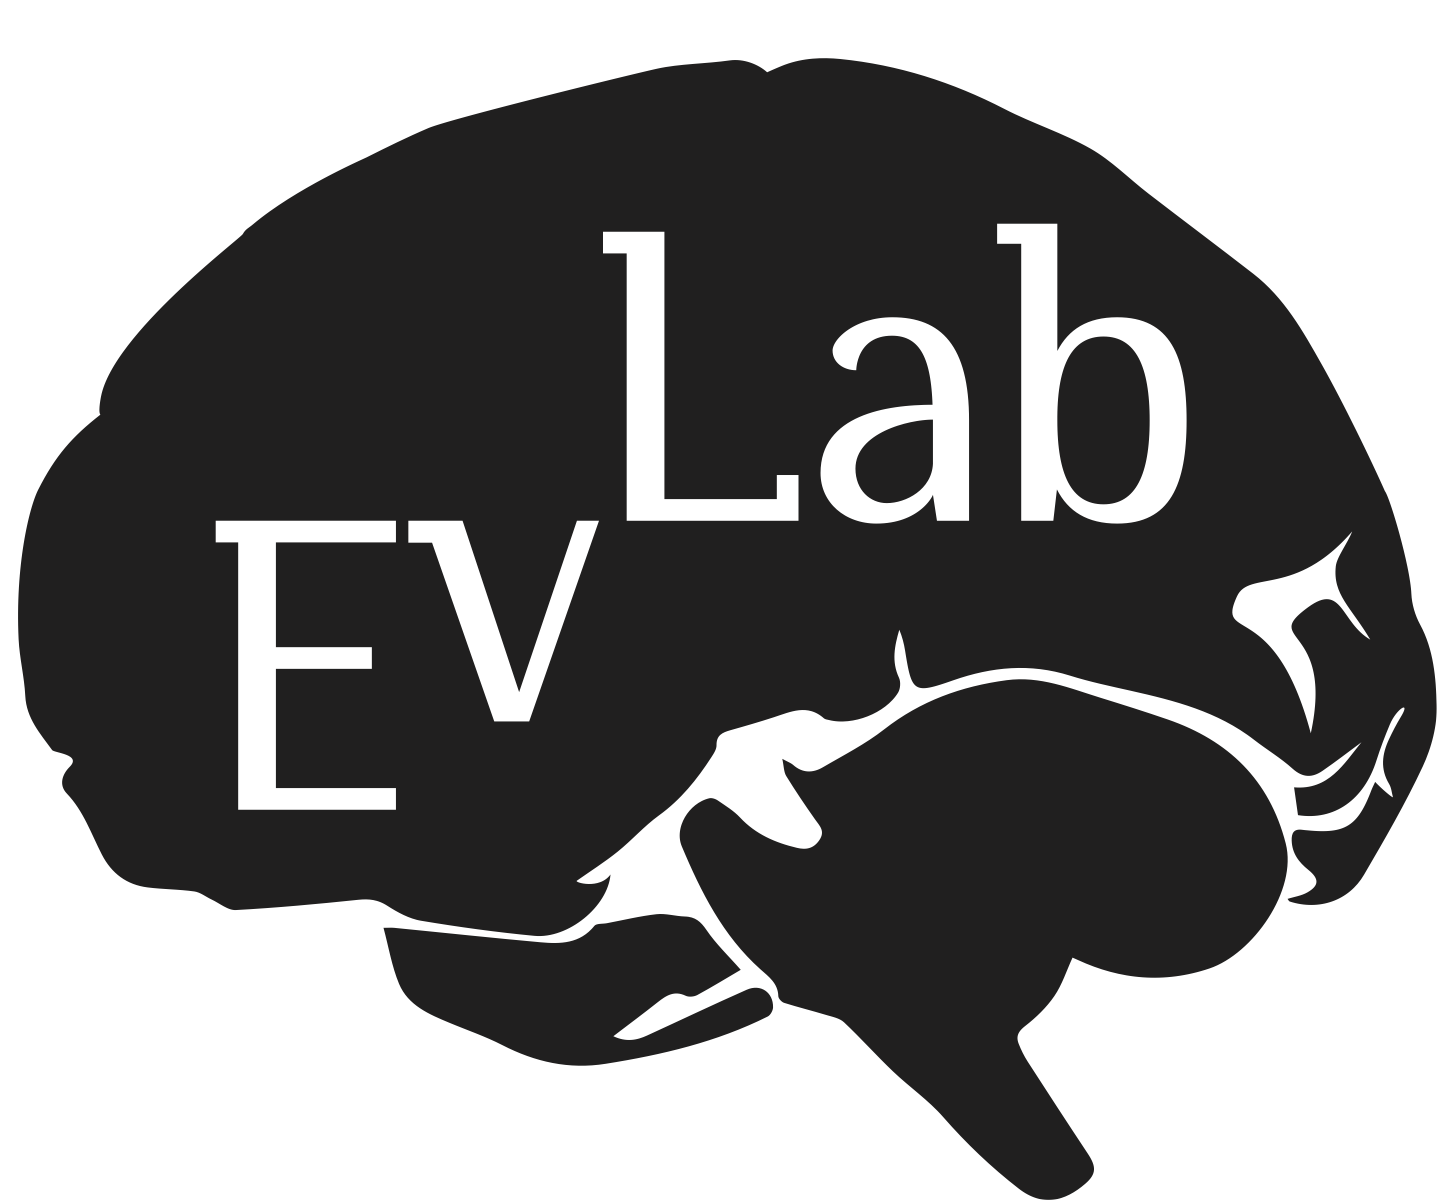 EvLab logo